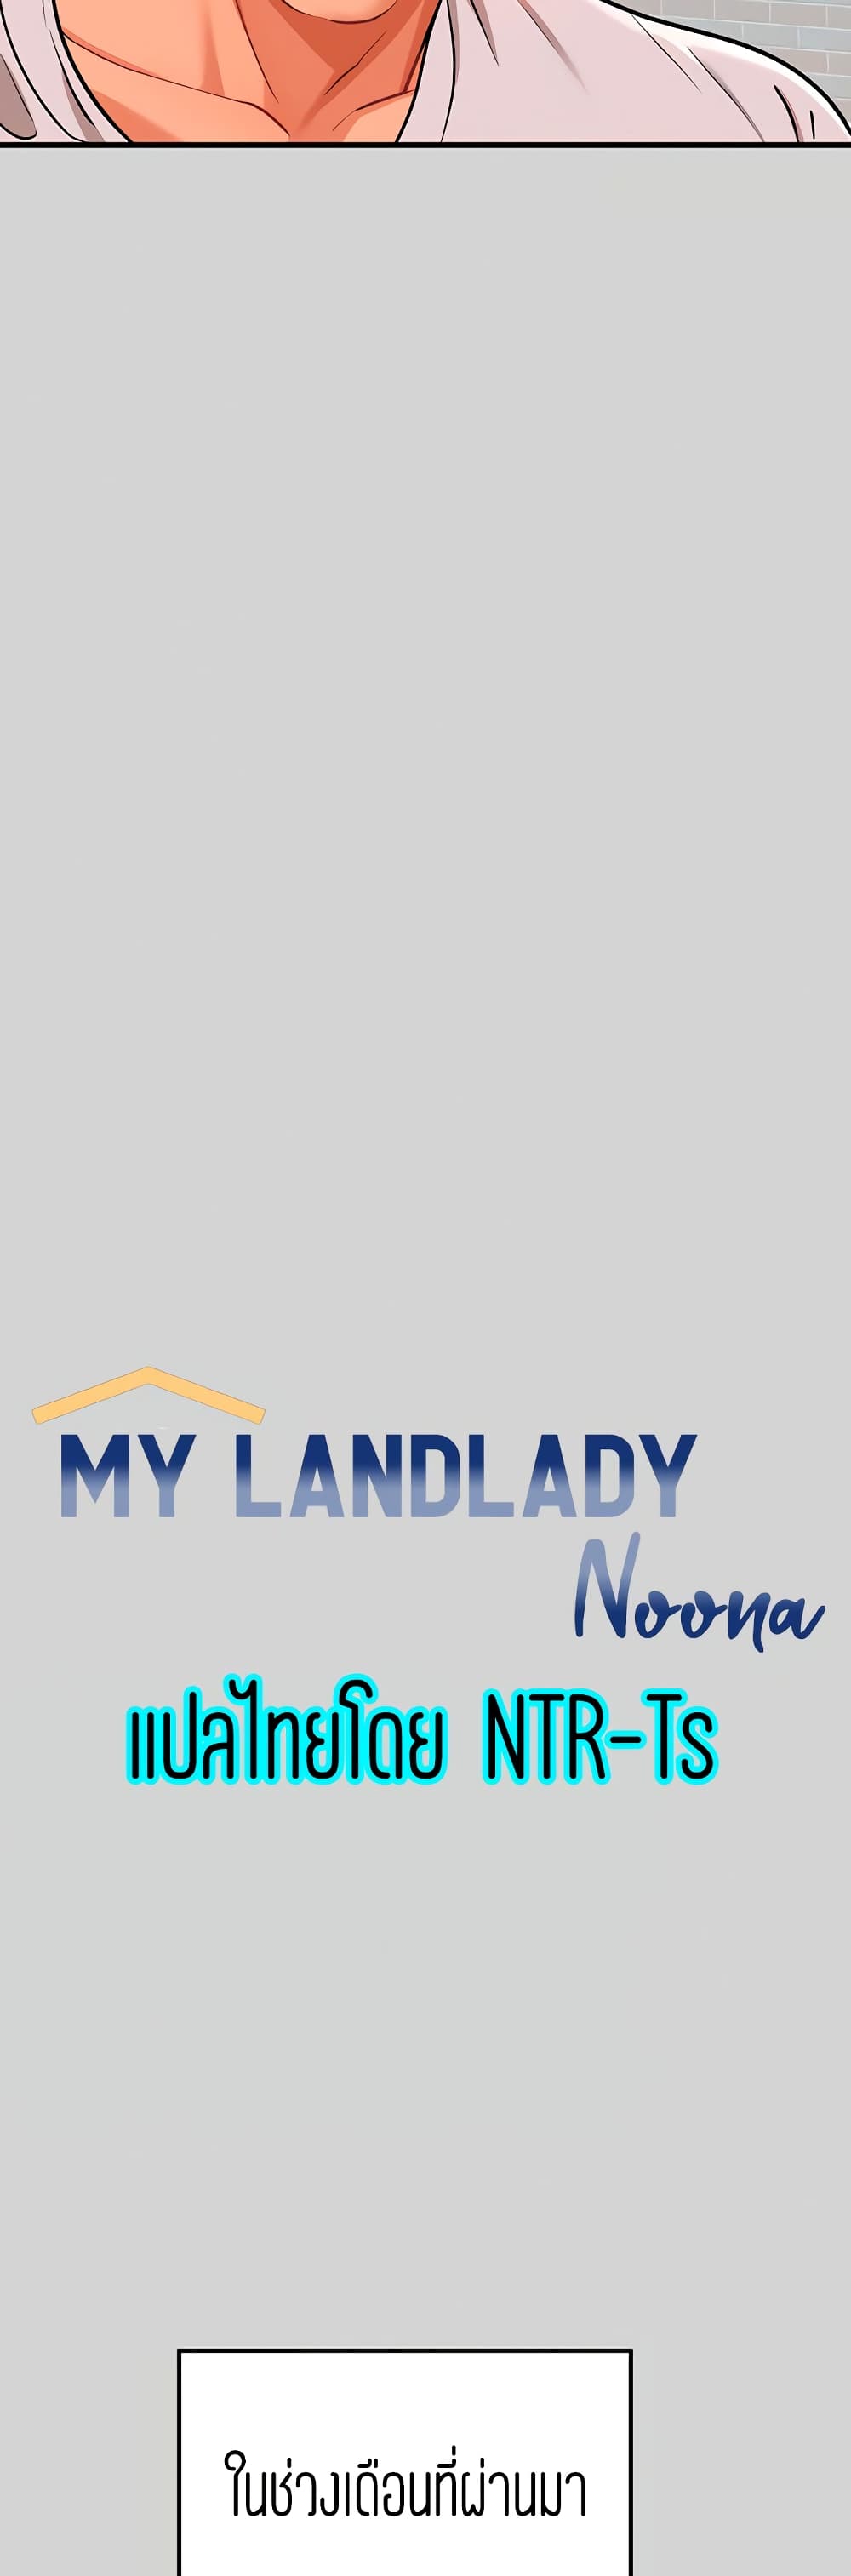 My Landlady Noona 12-12